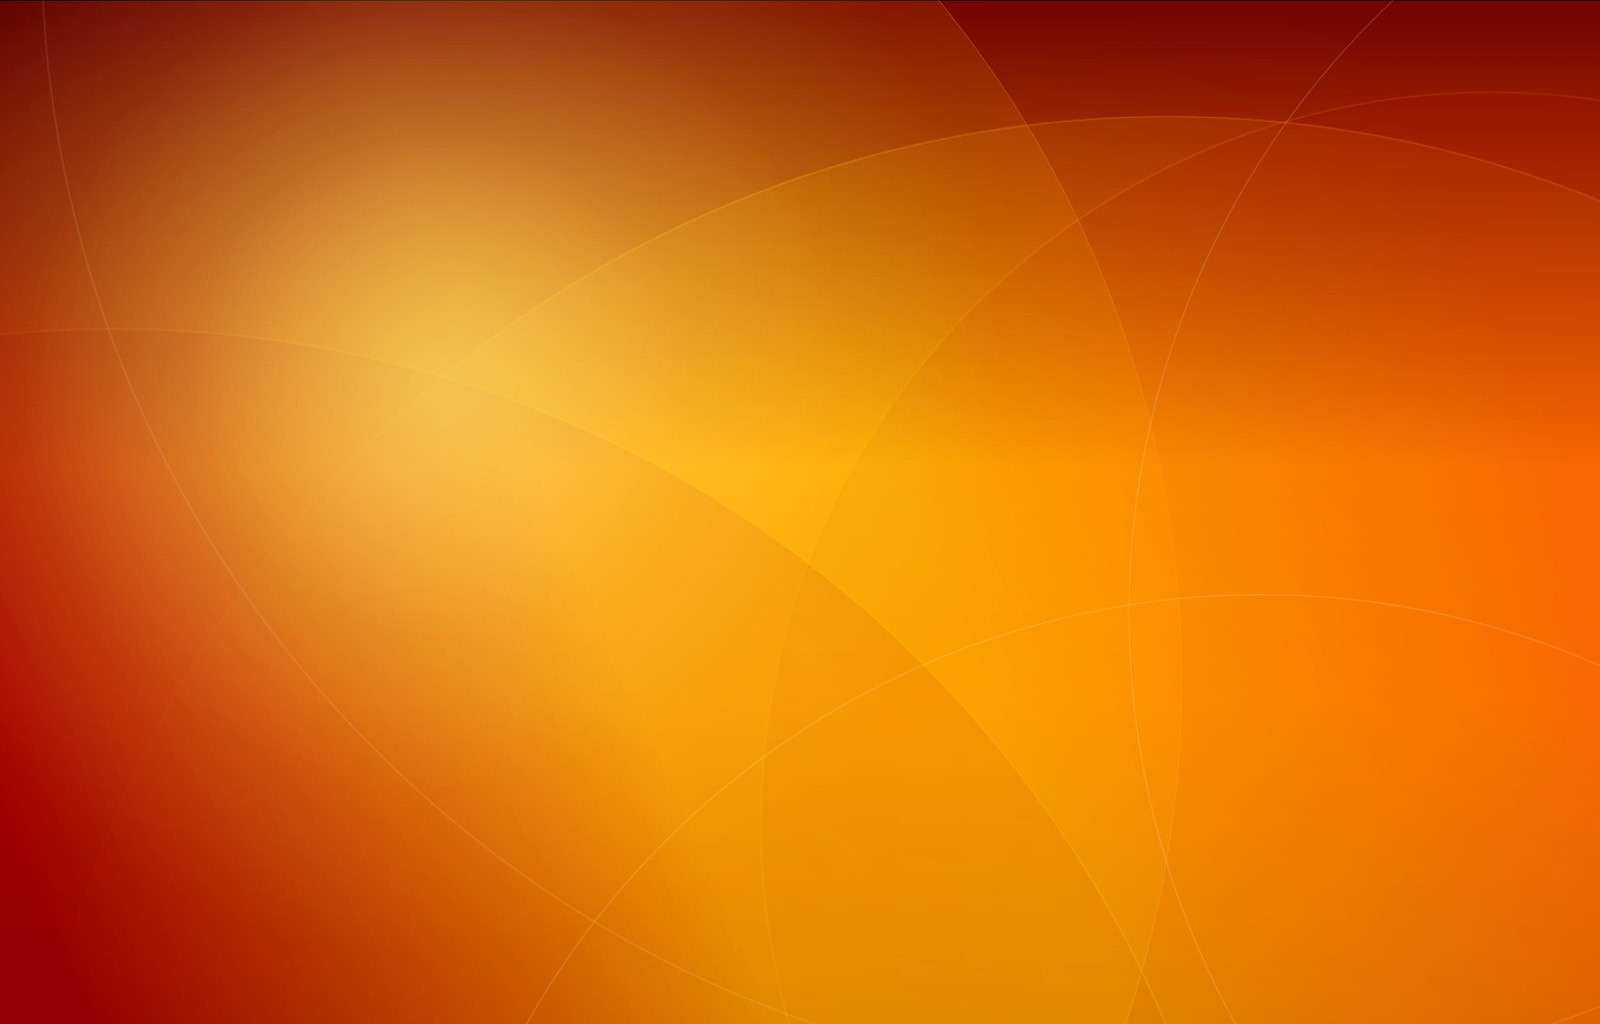 Free Download Orange Background Hd Wallpaper Home Orange Background Hd Wallpaper [1600x1024] For